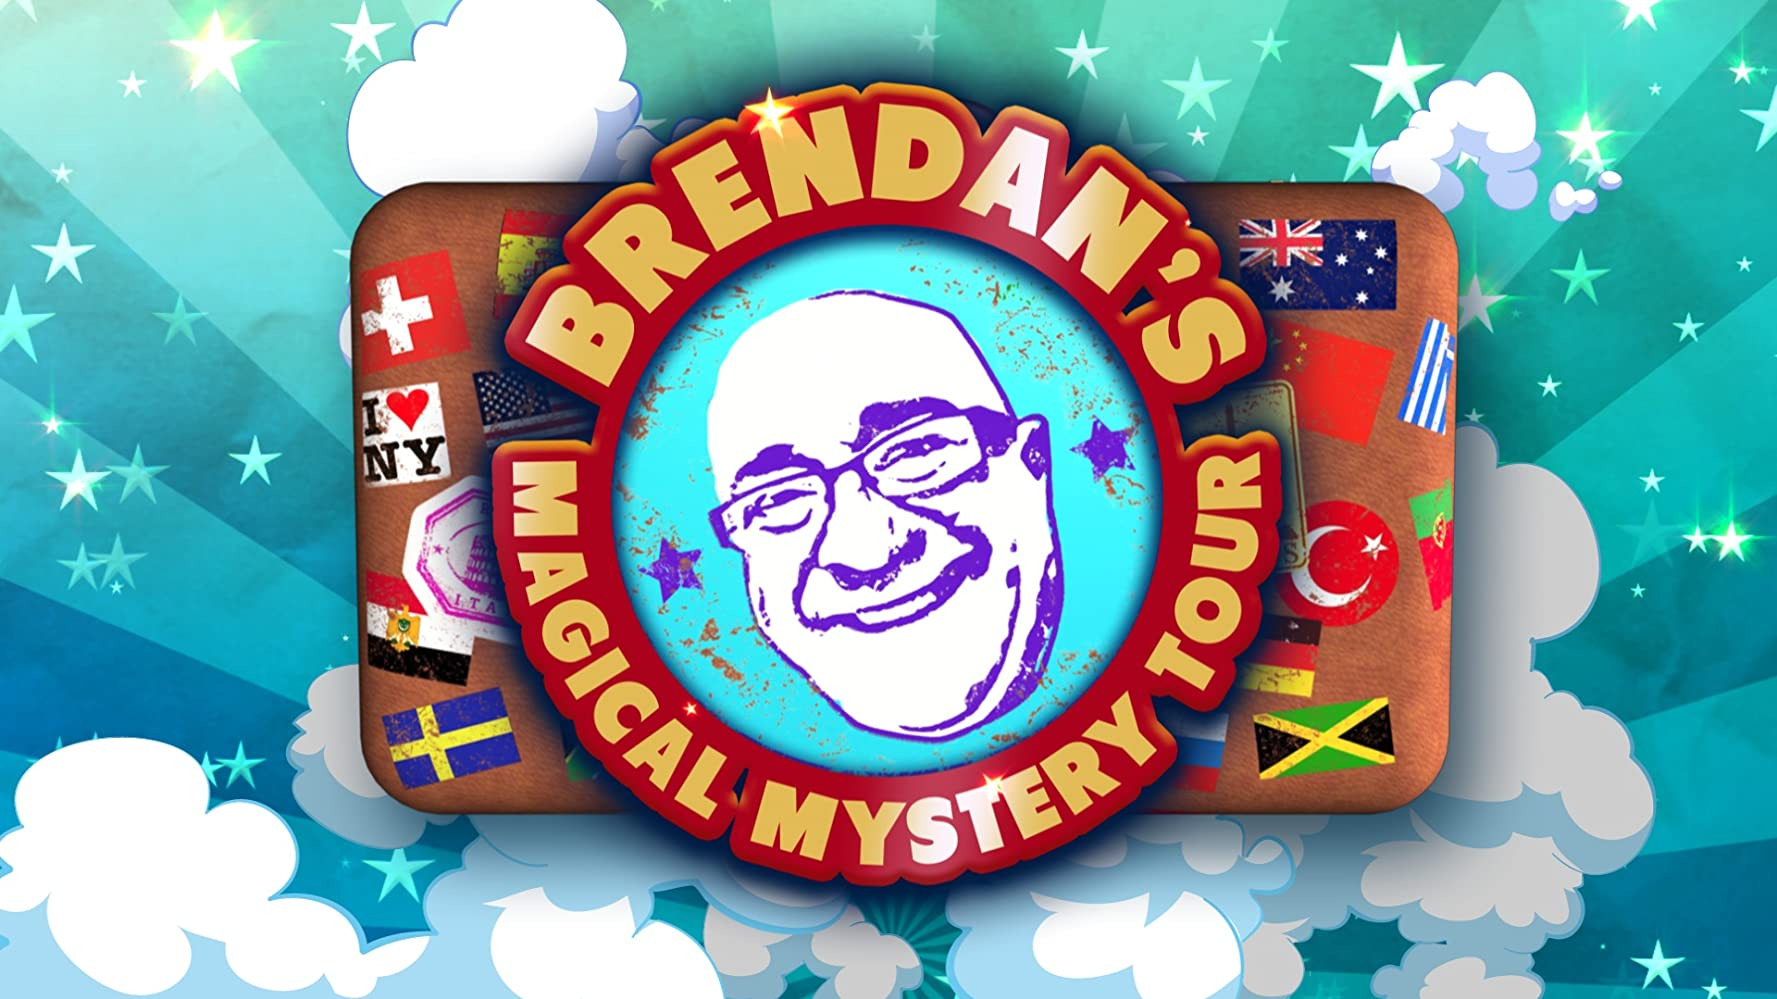 Show Brendan's Magical Mystery Tour